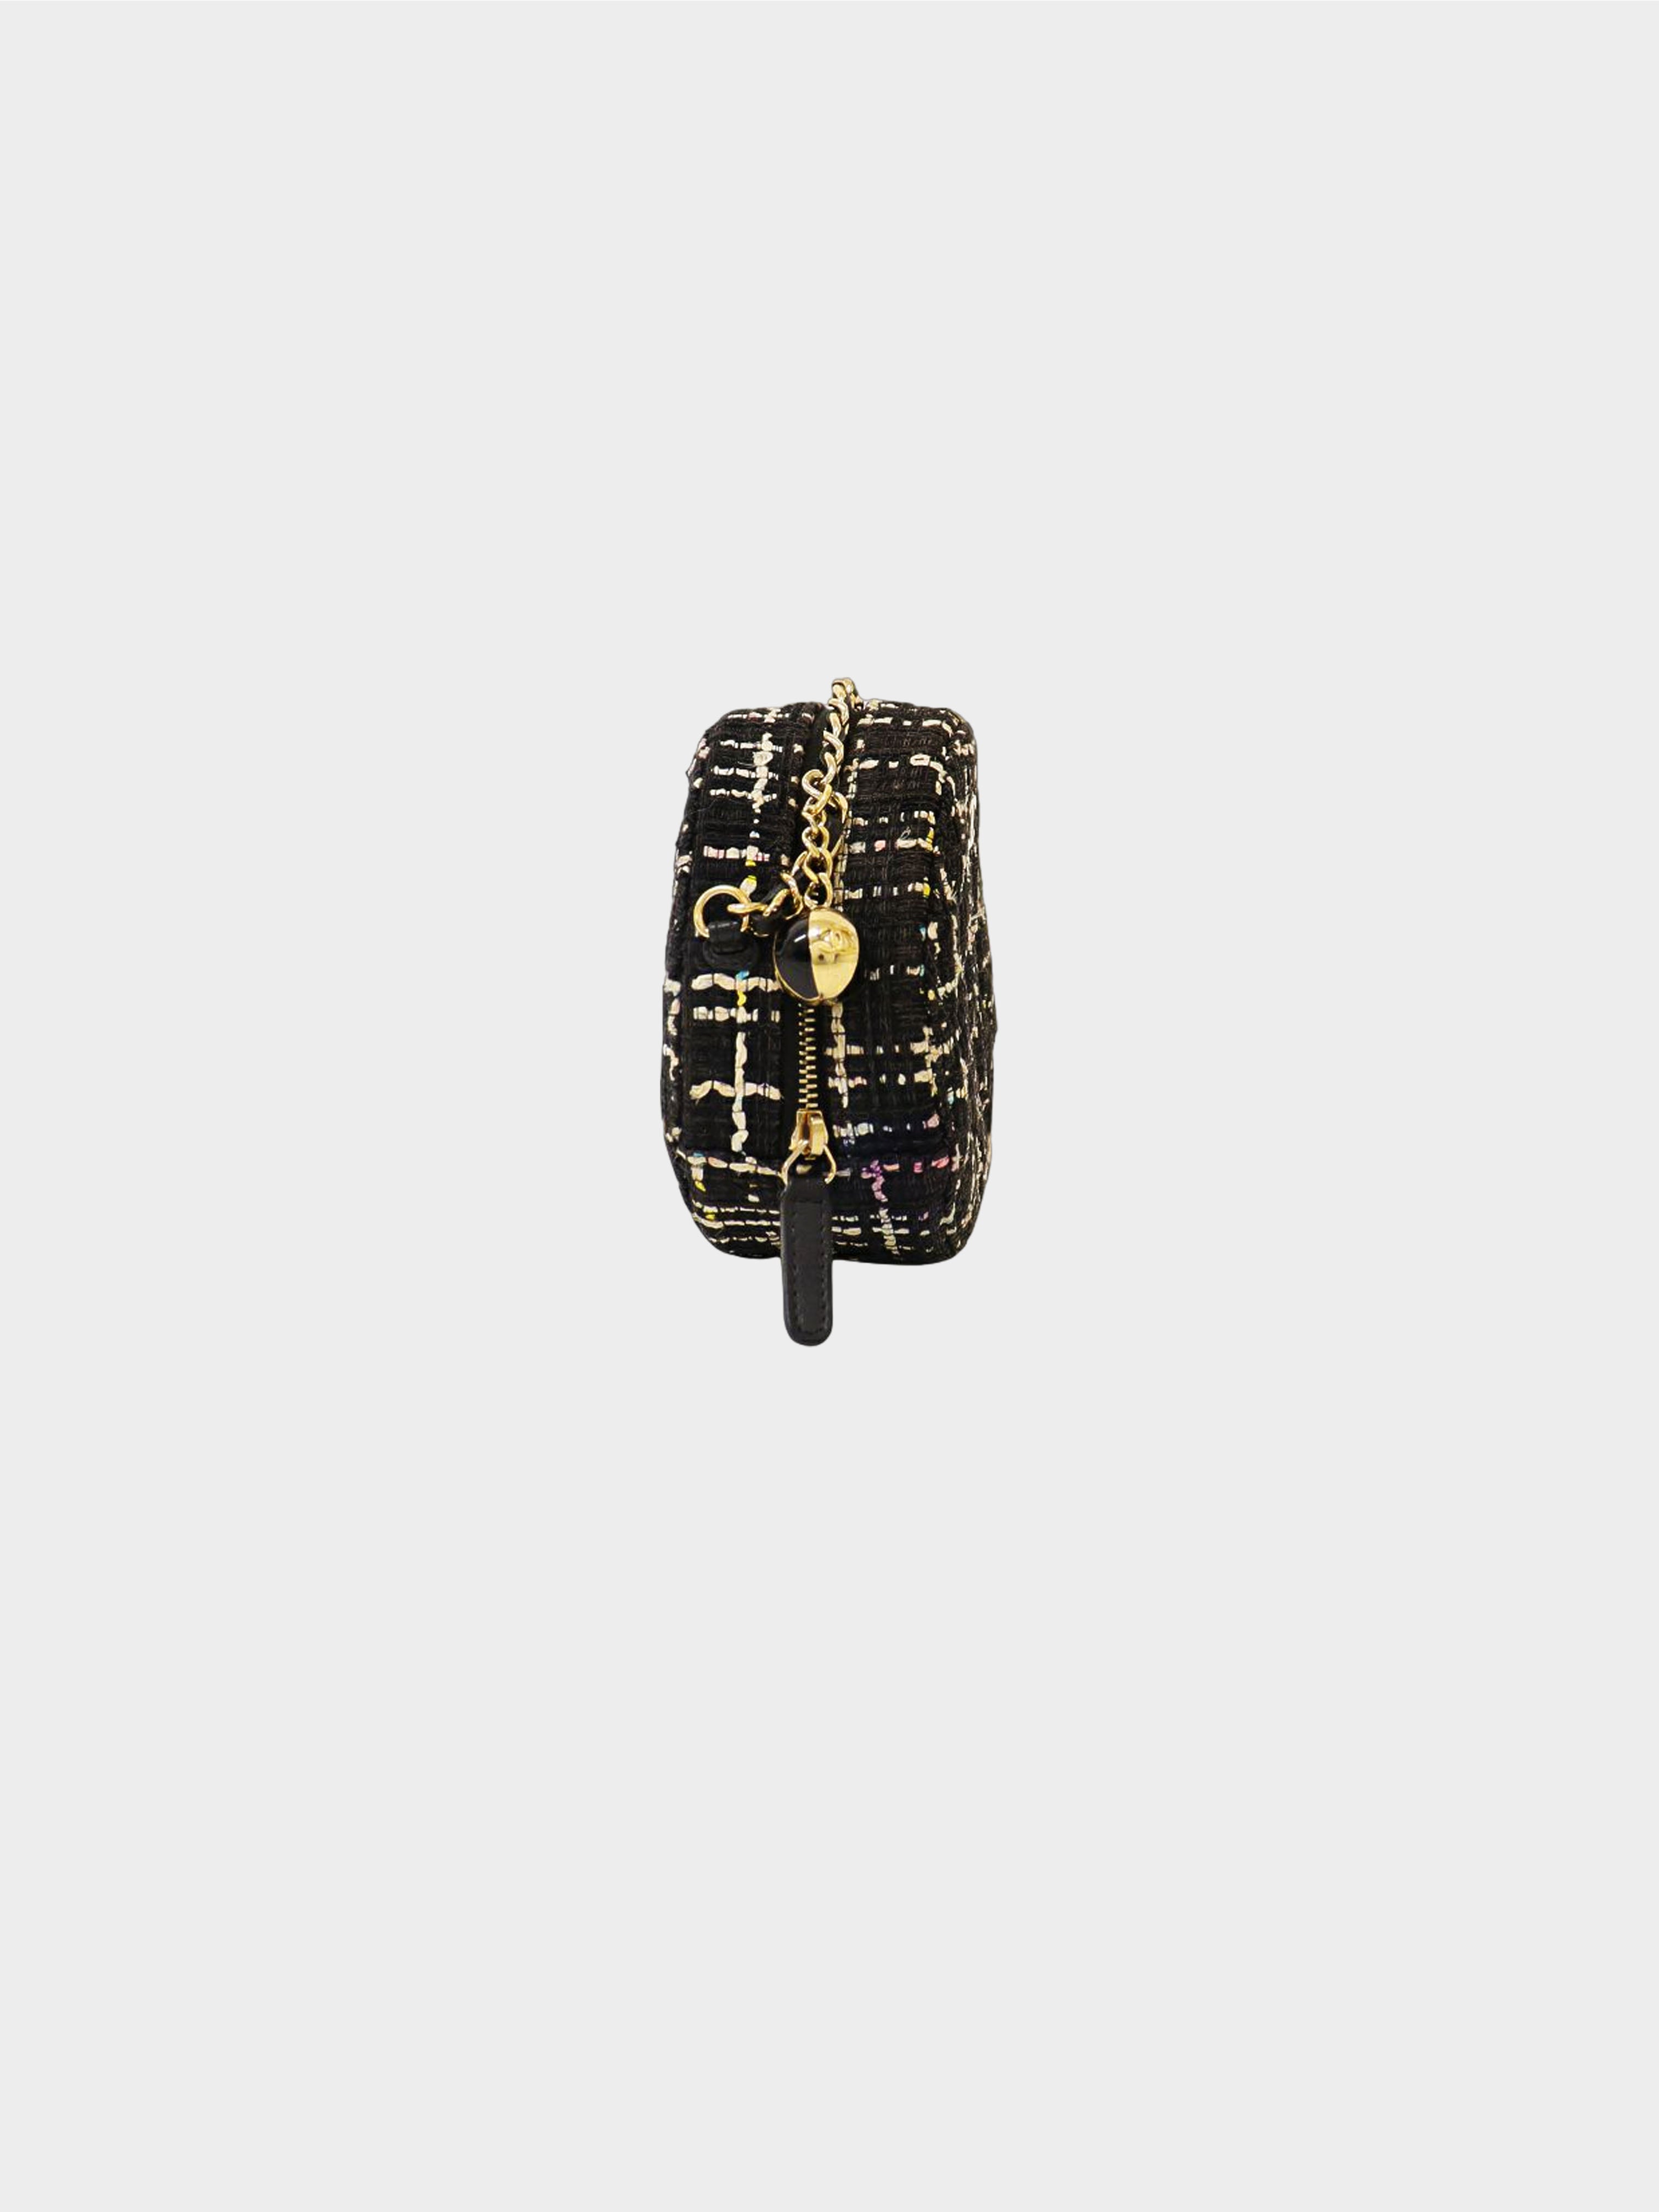 Chanel 2019 Black Tweed Mini Round Shoulder Bag